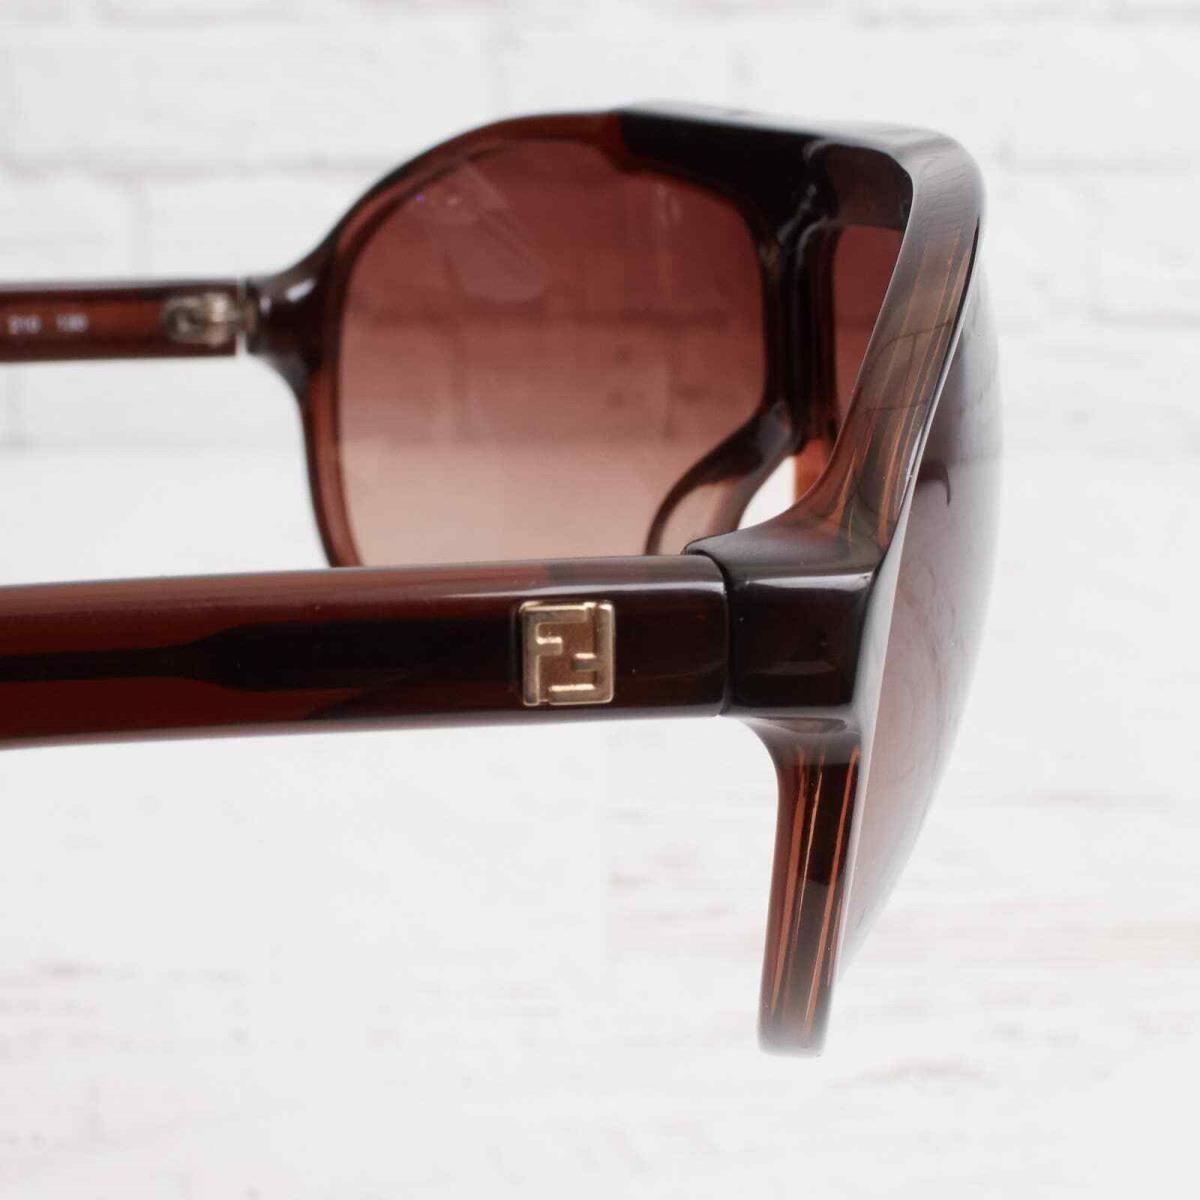 Fendi sunglasses  - Brown Frame